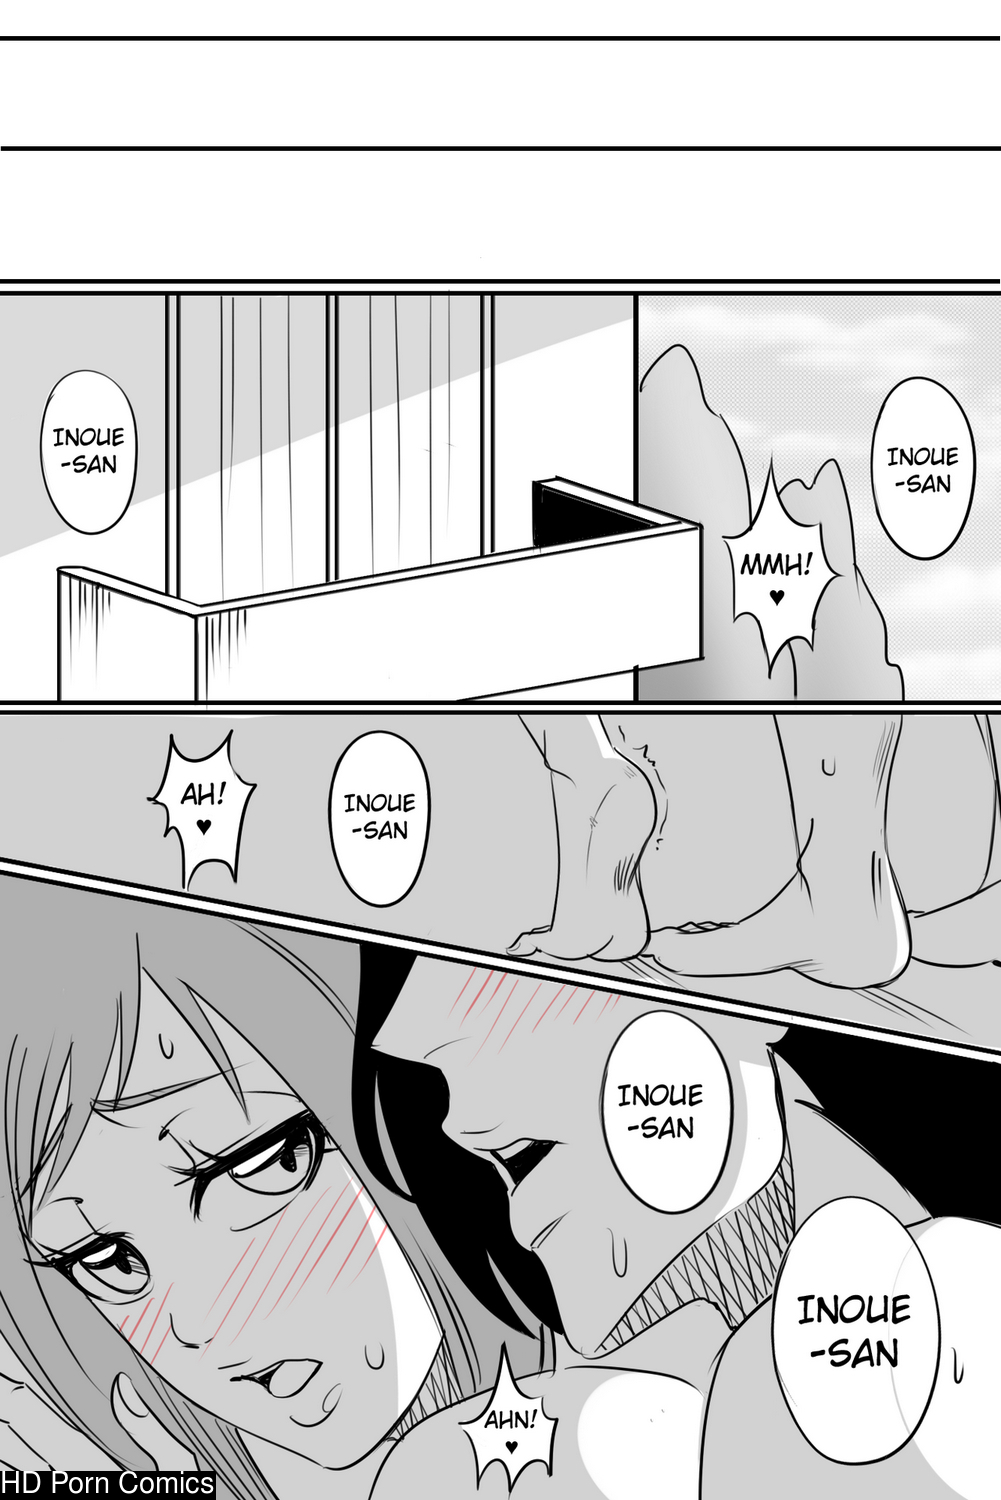 Ishida - Ishida x Orihime - Curiosity comic porn - HD Porn Comics